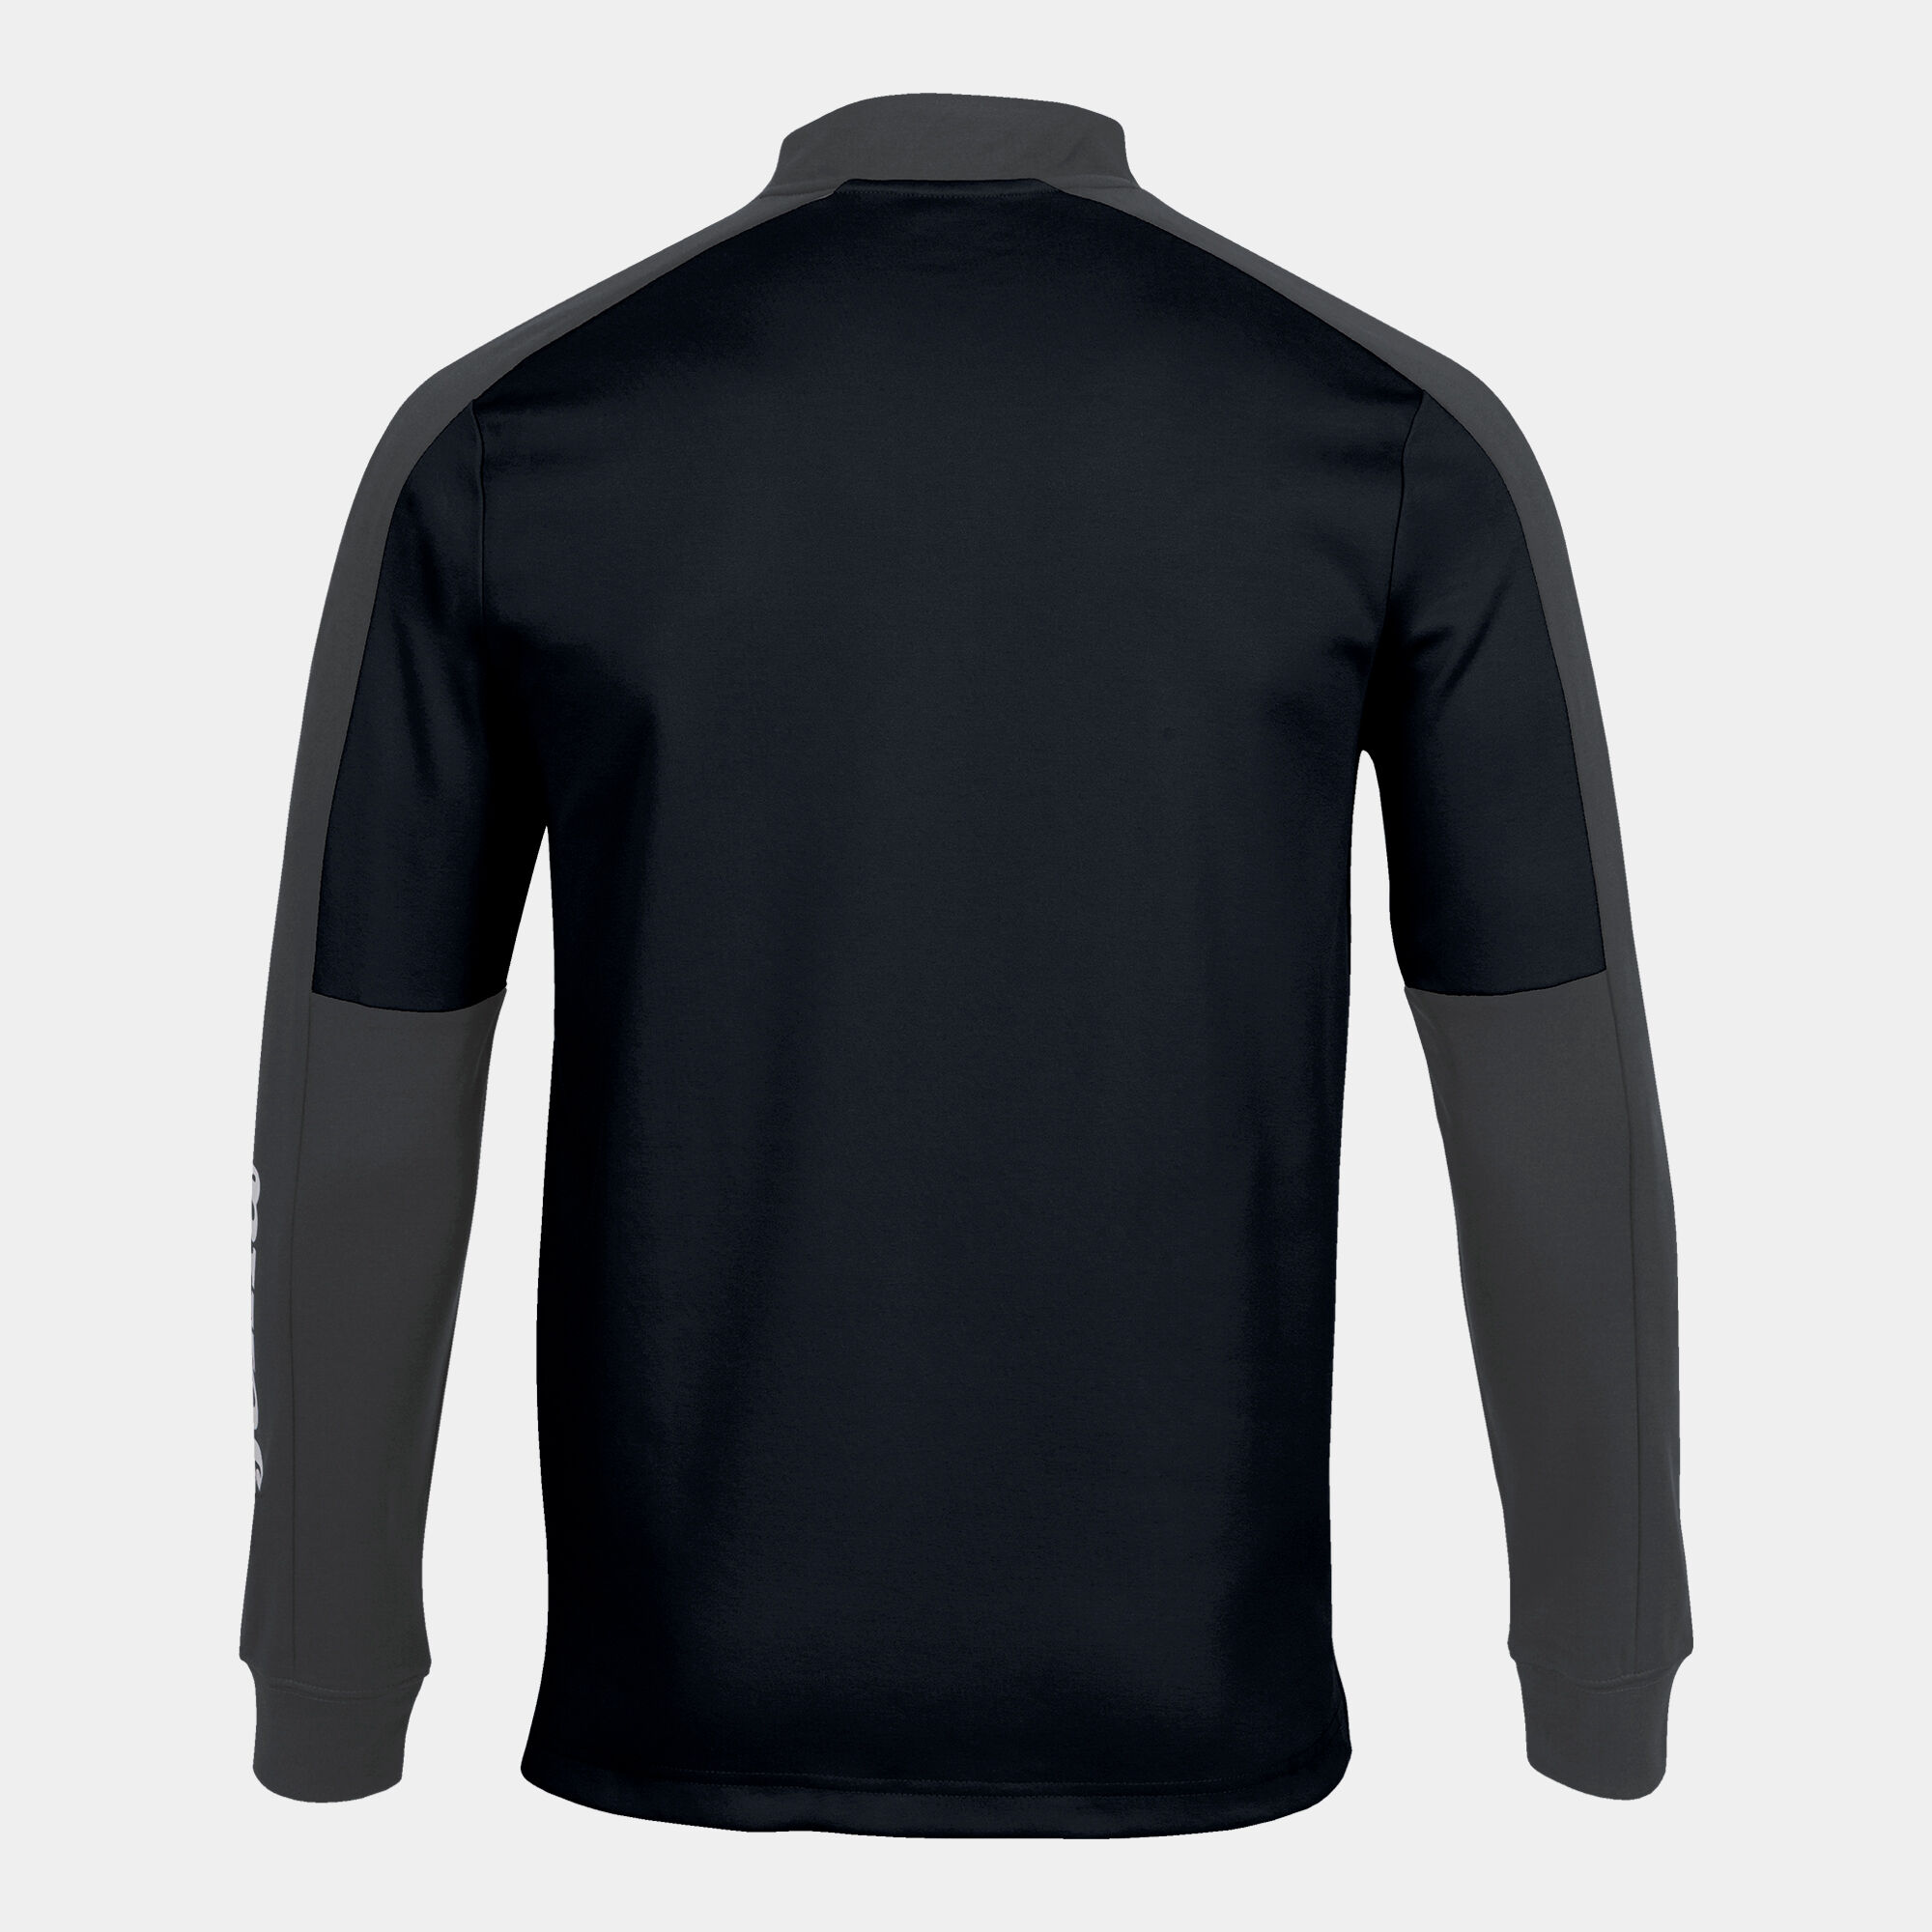 Sweat-shirt homme Eco Championship noir anthracite